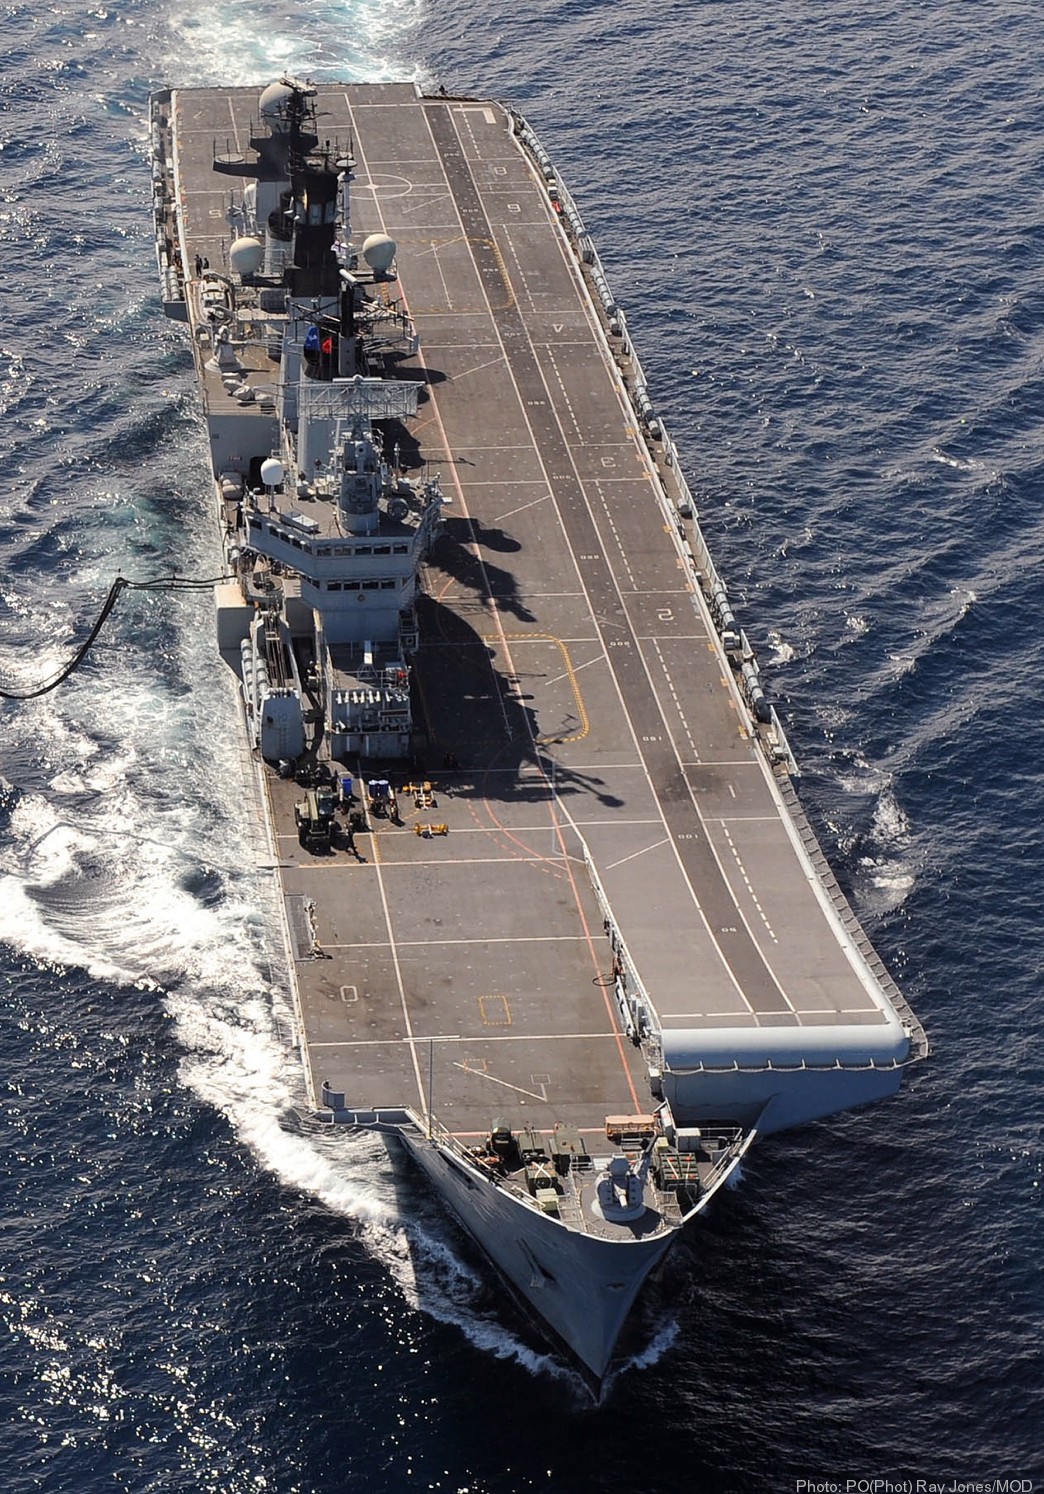 r-06 hms illustrious invincible class aircraft carrier royal navy 28